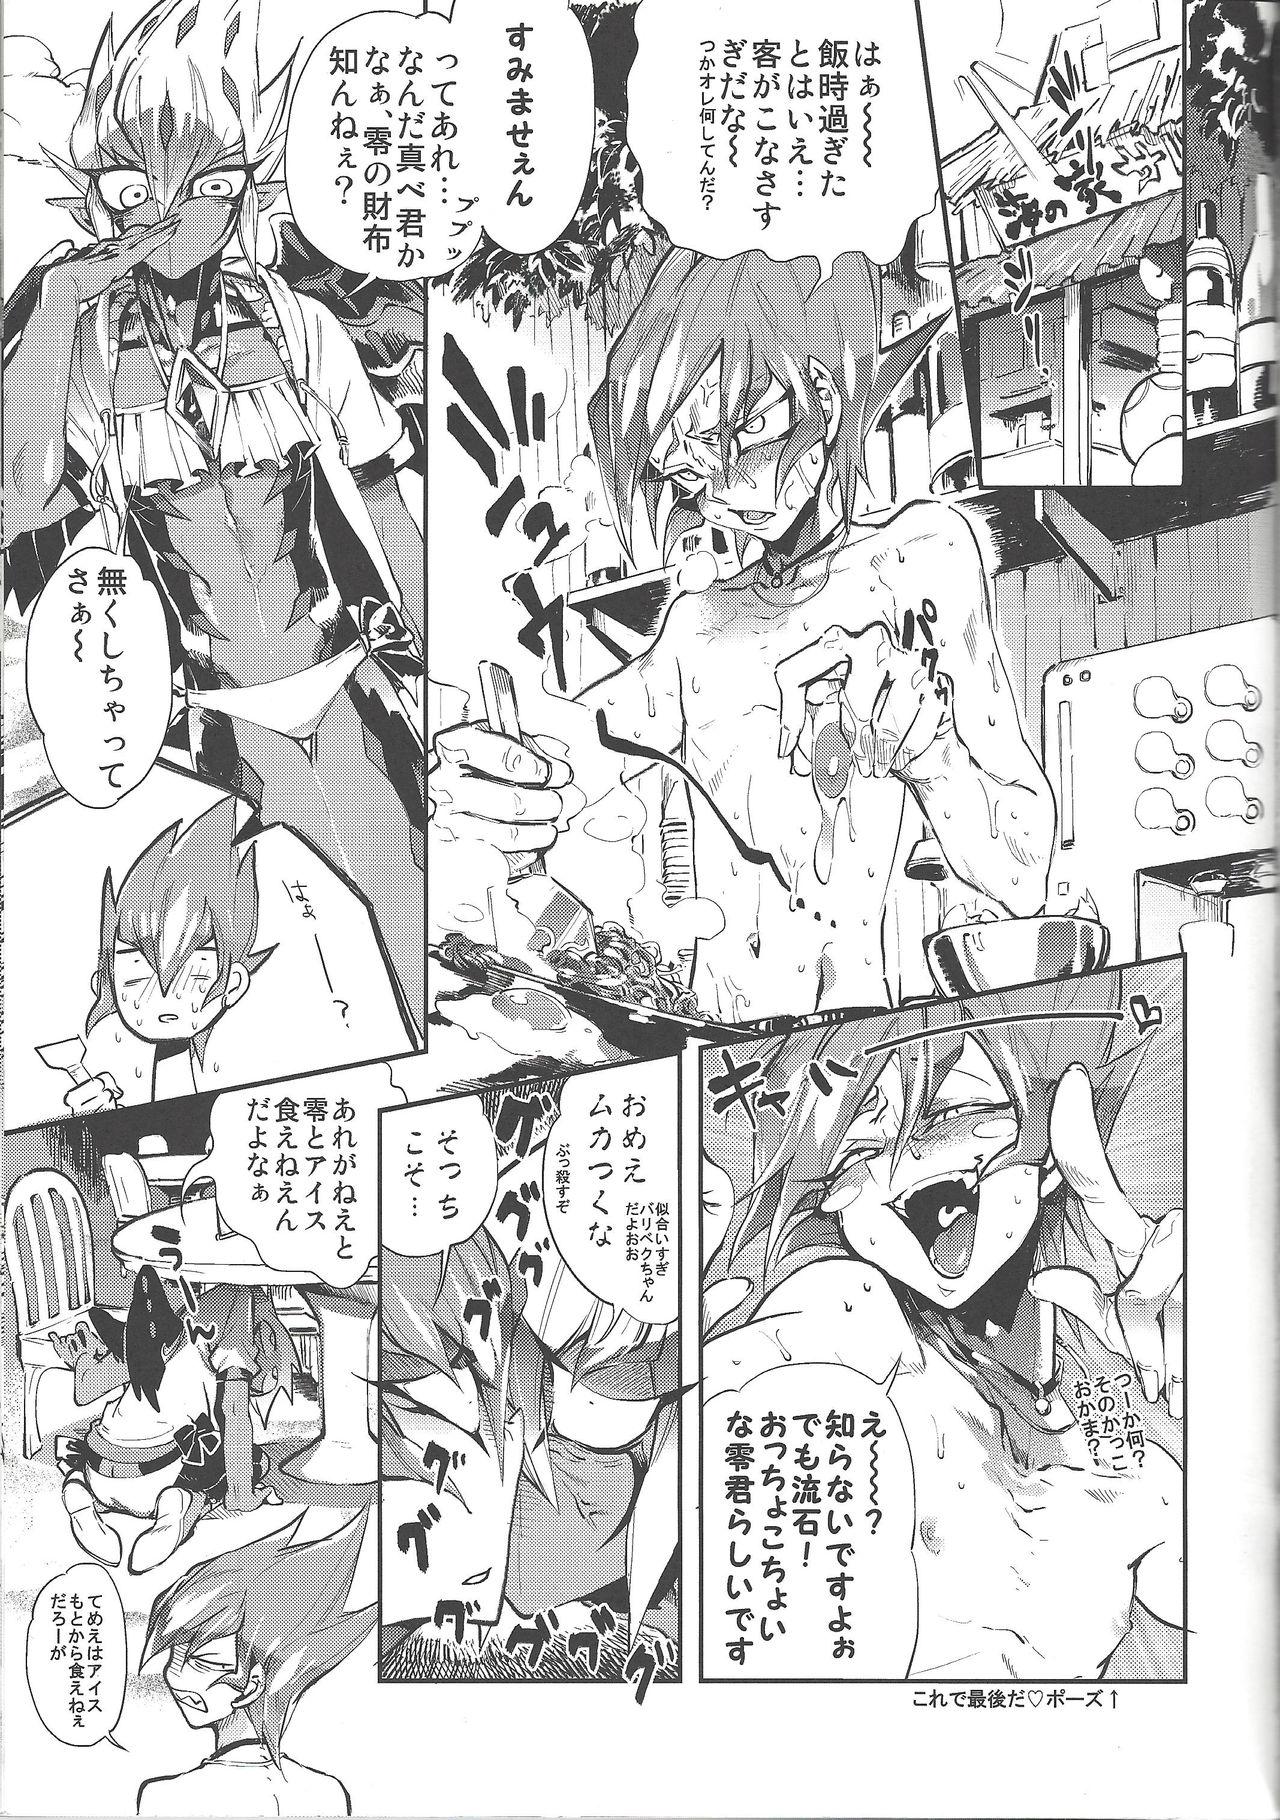 Footfetish XXXX no Vec-chan 3 - Yu-gi-oh zexal Cheating - Page 4